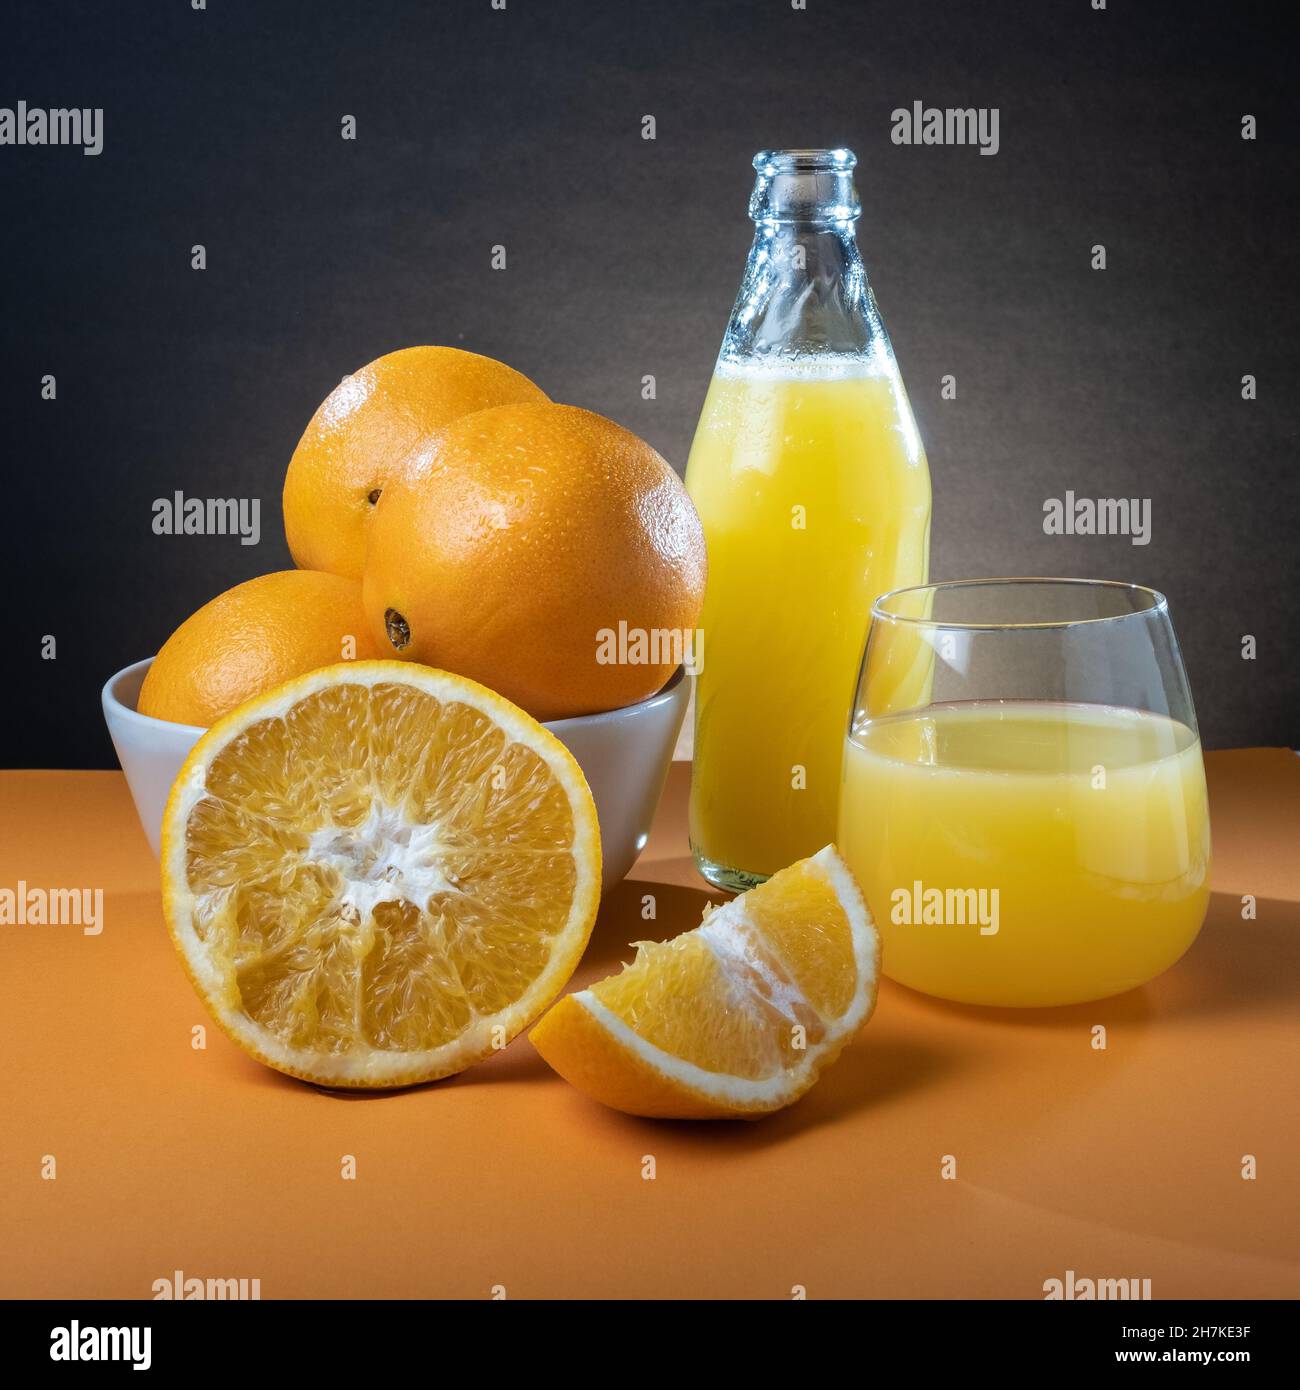 https://c8.alamy.com/comp/2H7KE3F/helsinki-finland-closeup-of-moist-oranges-and-glass-bottle-of-orange-juice-on-the-table-2H7KE3F.jpg